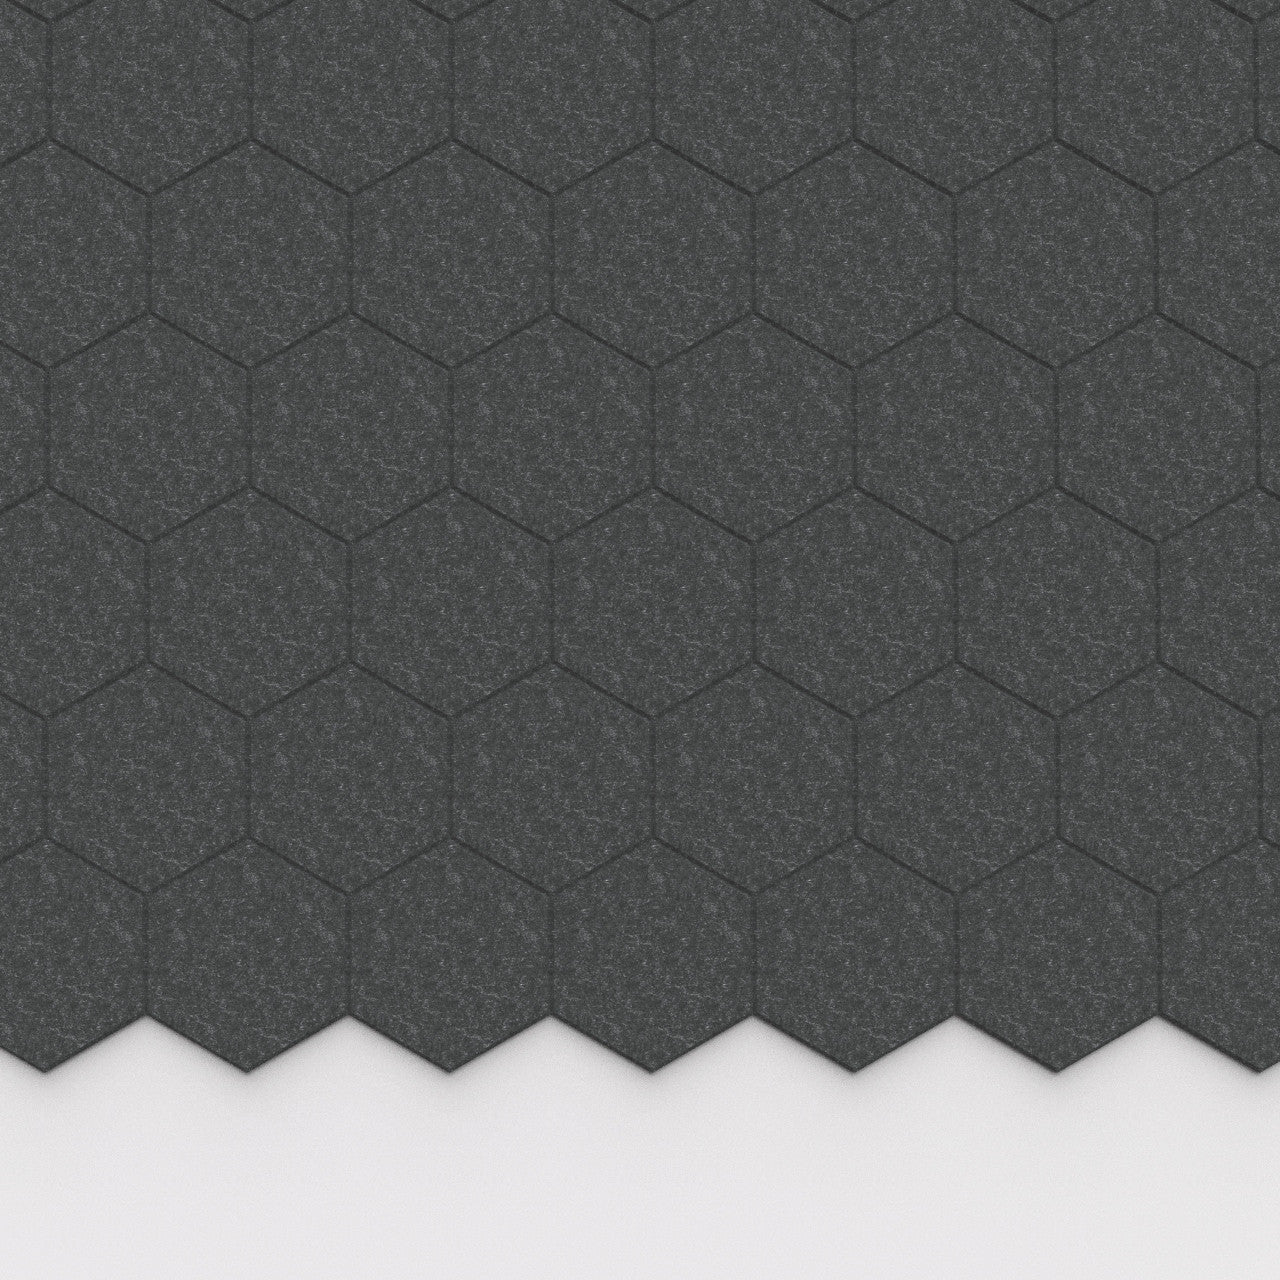 100% Recycled PET Felt Hexagon Plain Small Acoustic Tile Dark Grey | Plastock